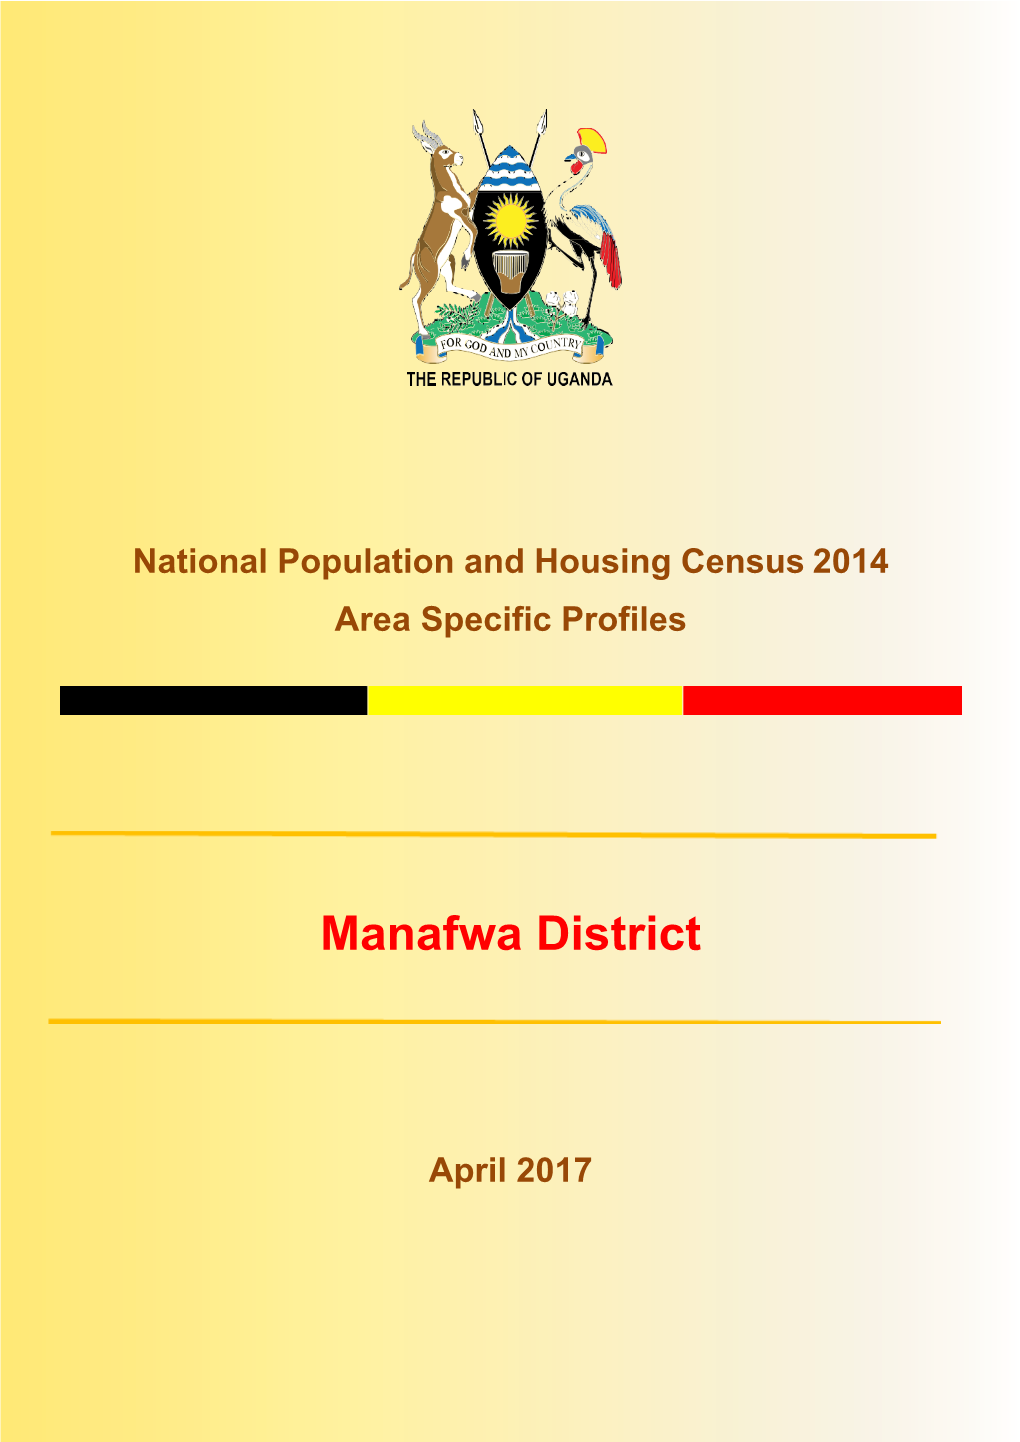 Manafwa District